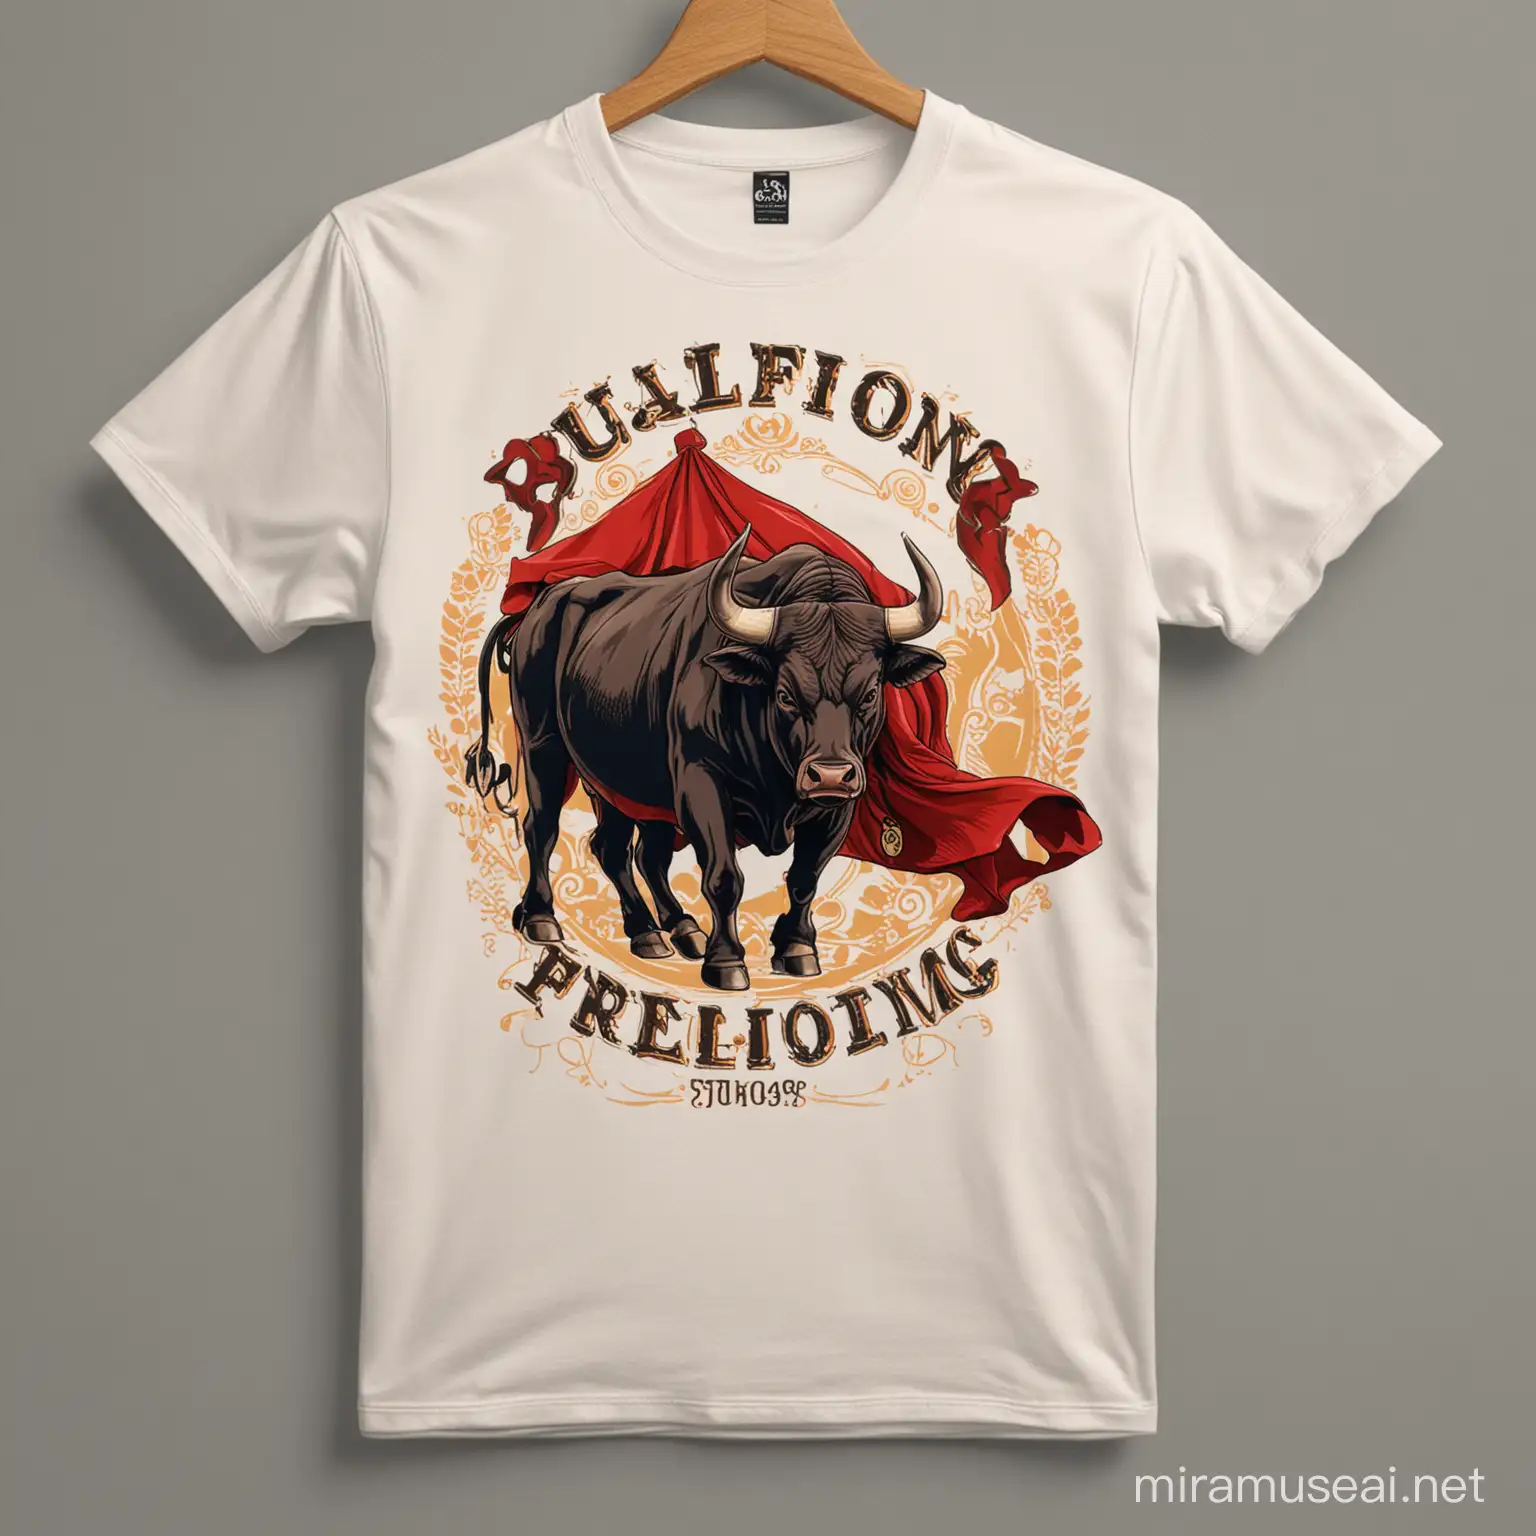 Dynamic Bullfighting Club TShirts with Bold Graphics